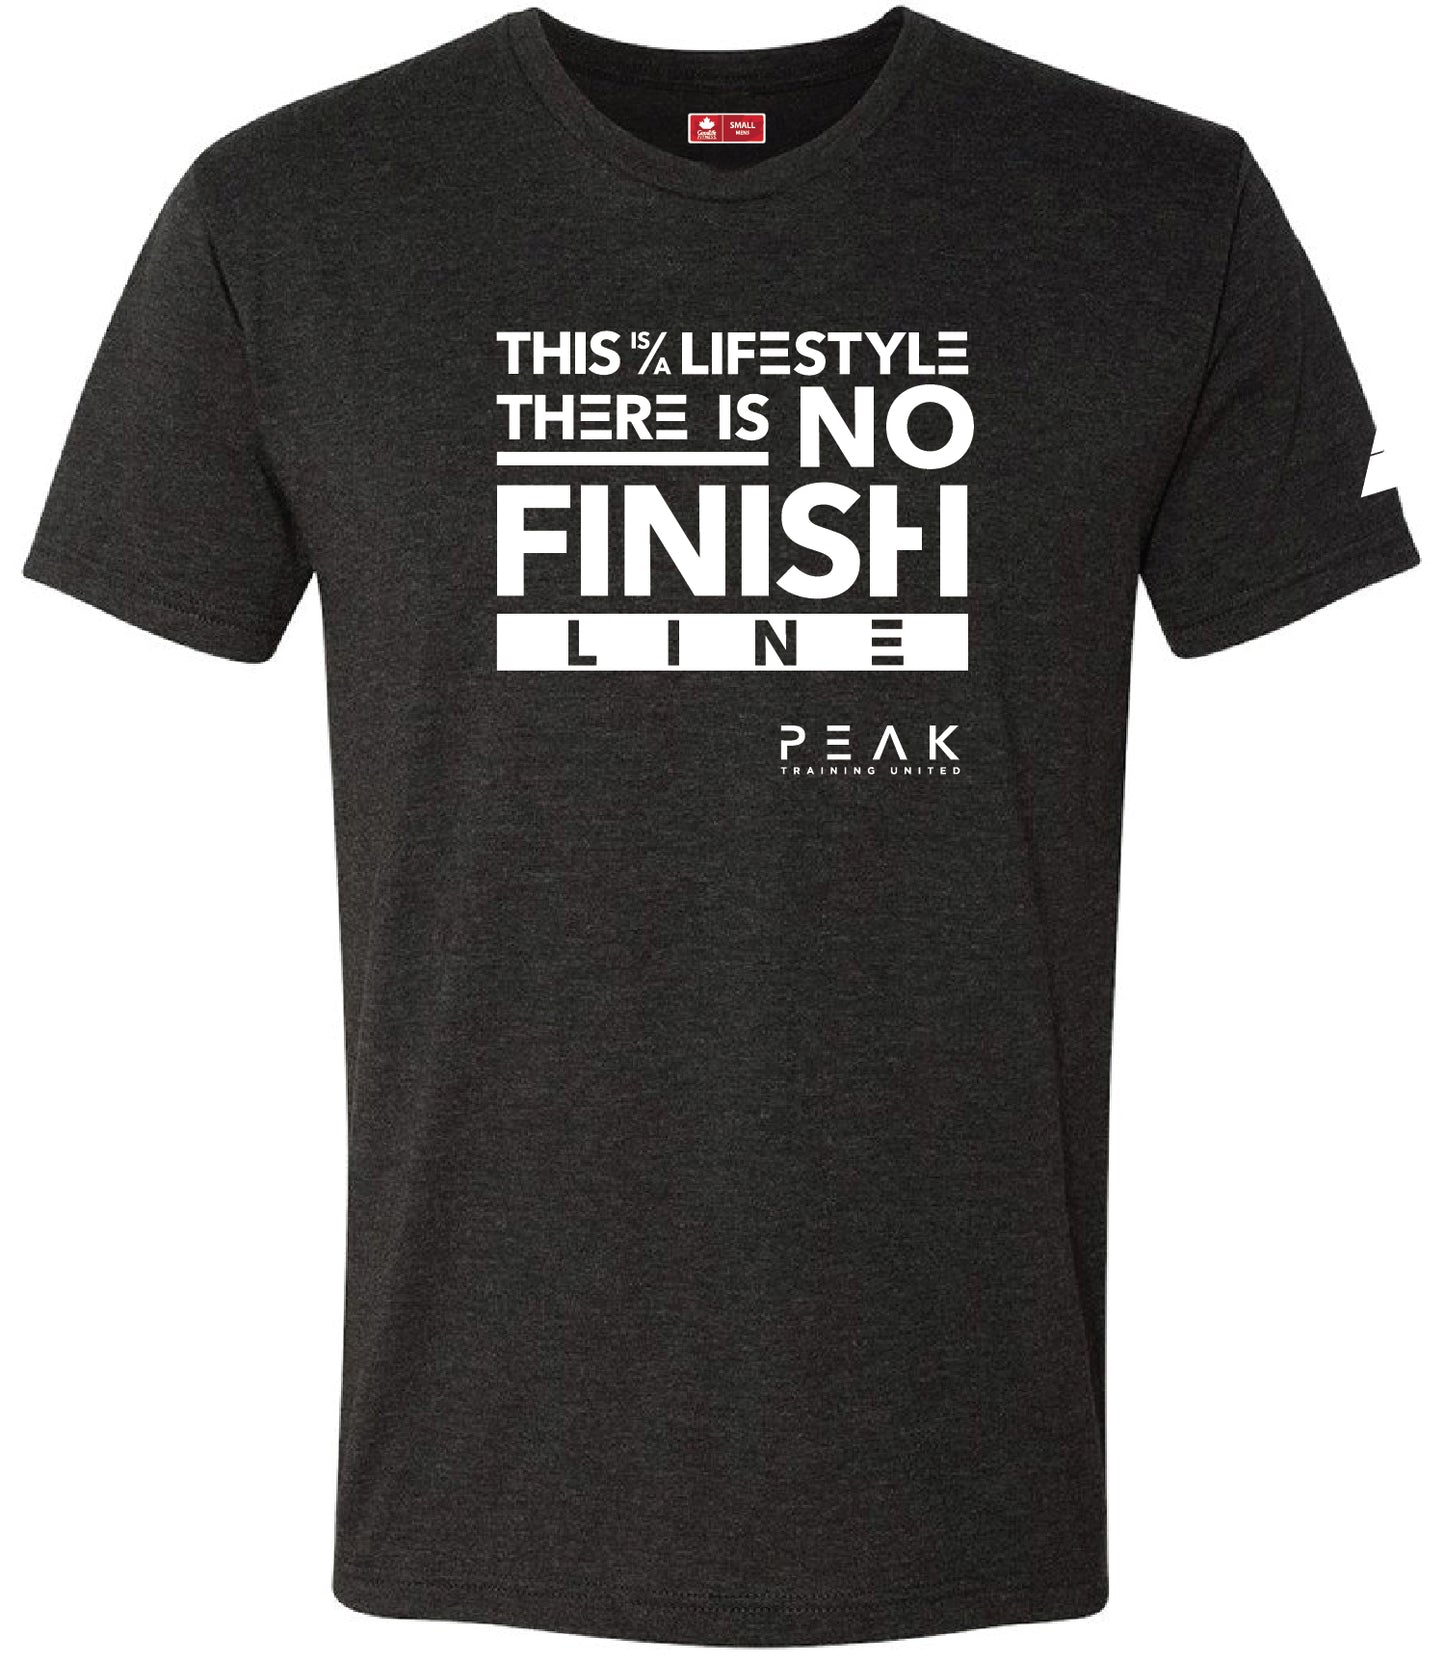 Mens PEAK No Finish Line Crew T-shirt